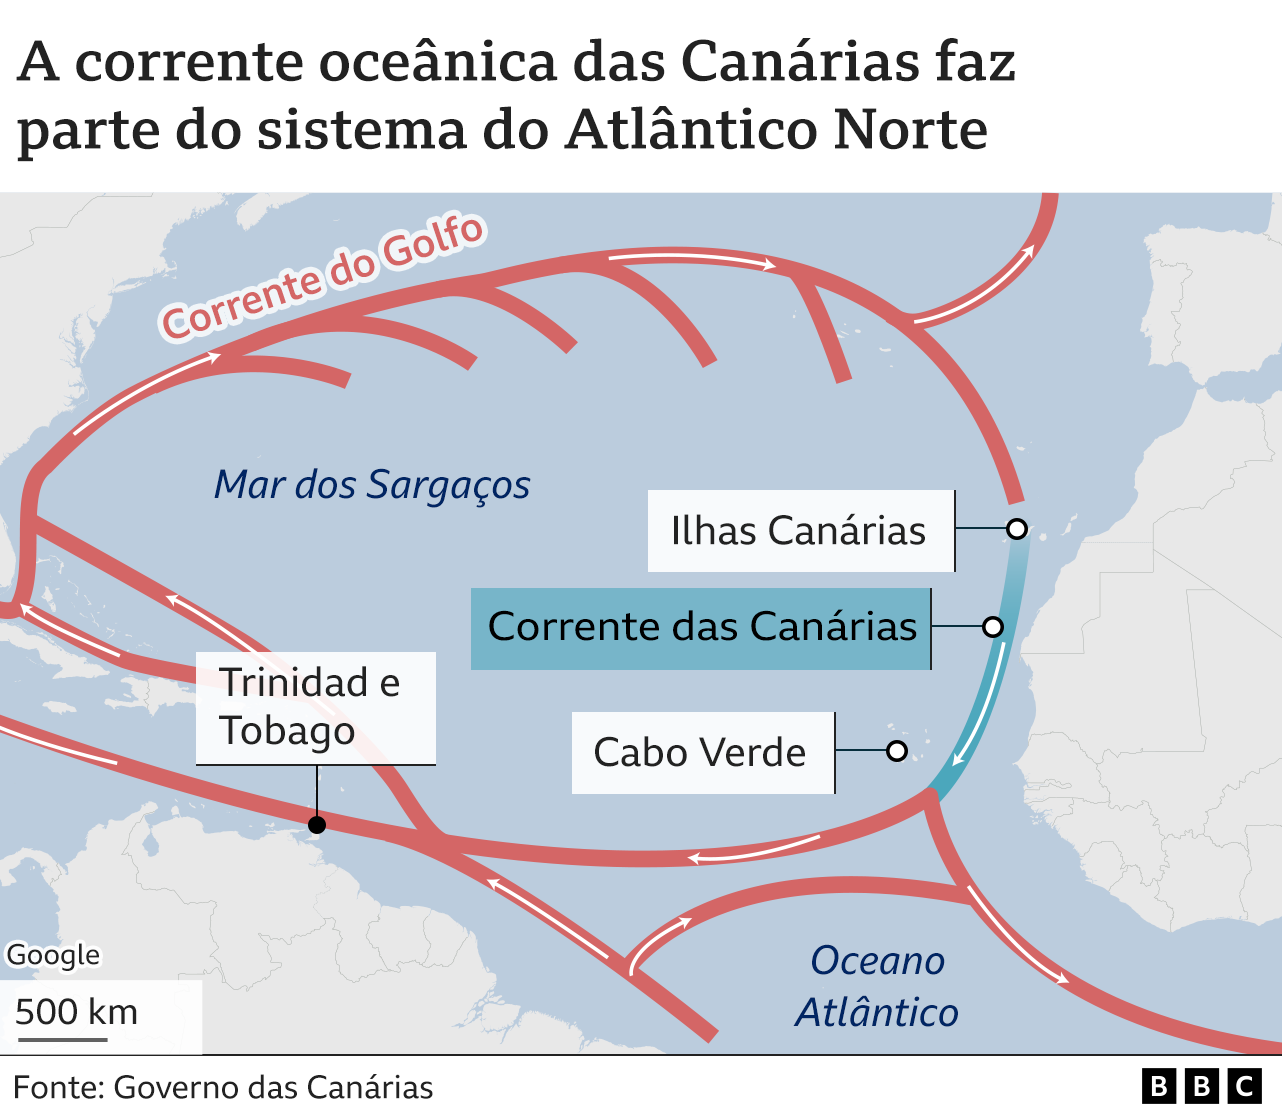 a perigosa corrente que arrasta migrantes da costa da áfrica para o caribe